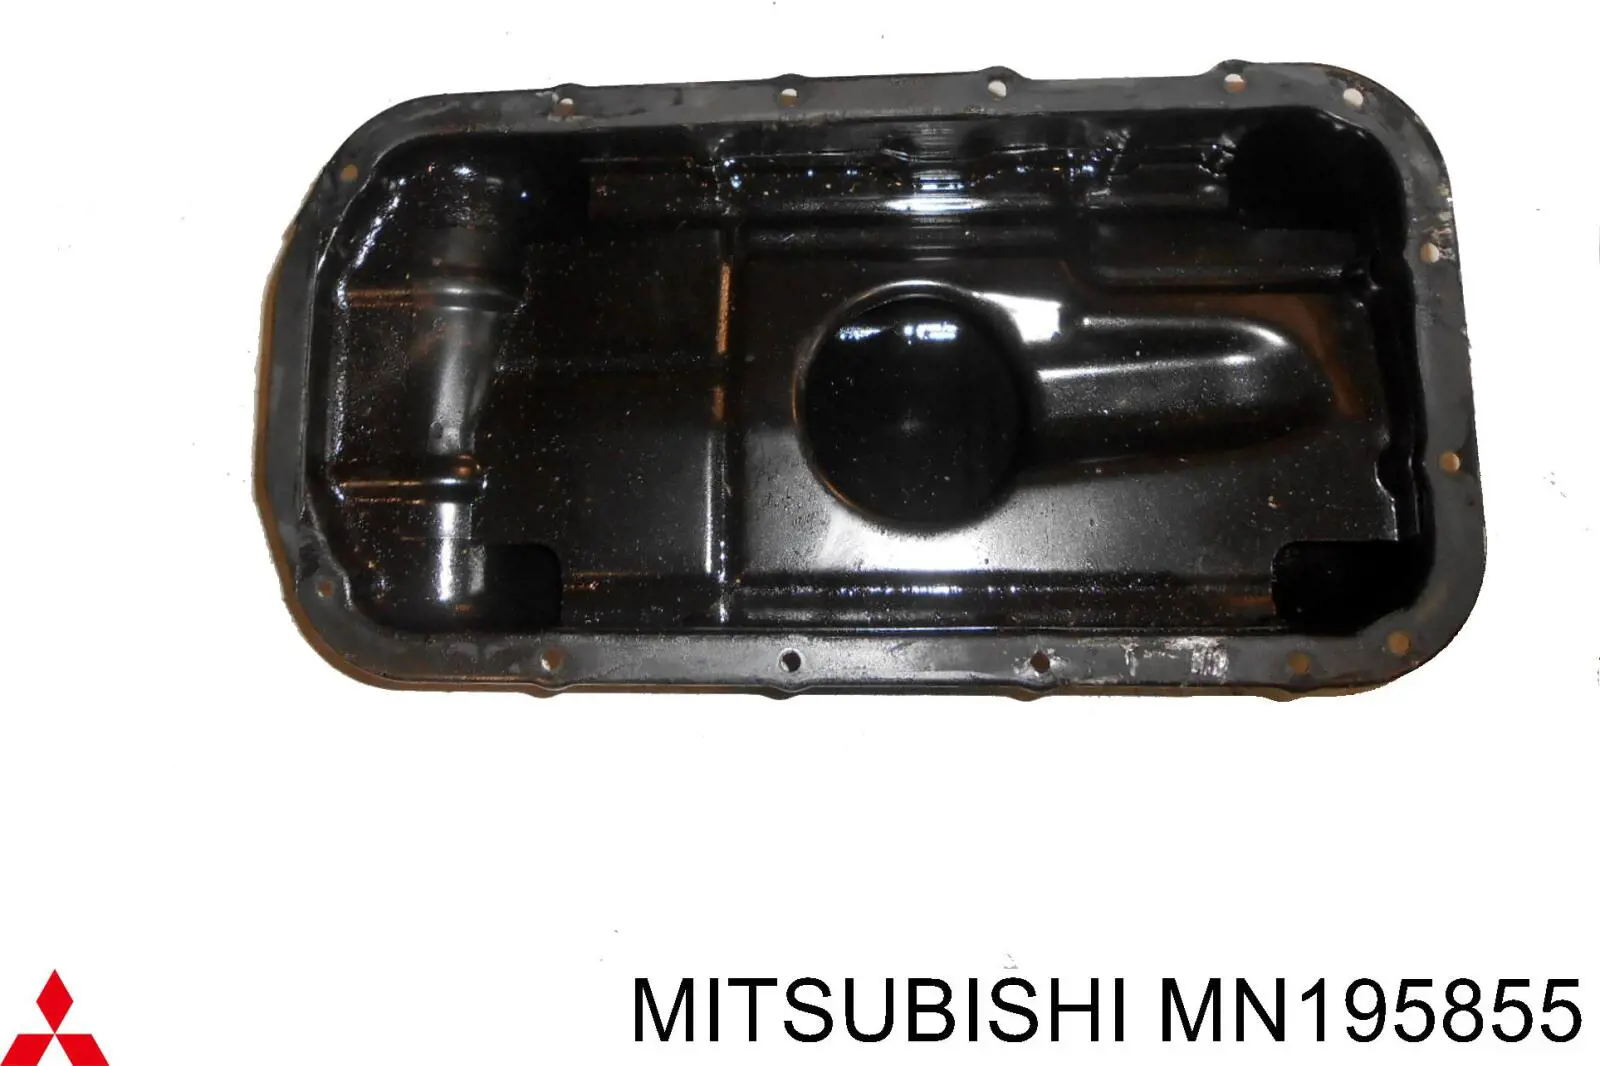 MN195855 Mitsubishi піддон масляний картера двигуна